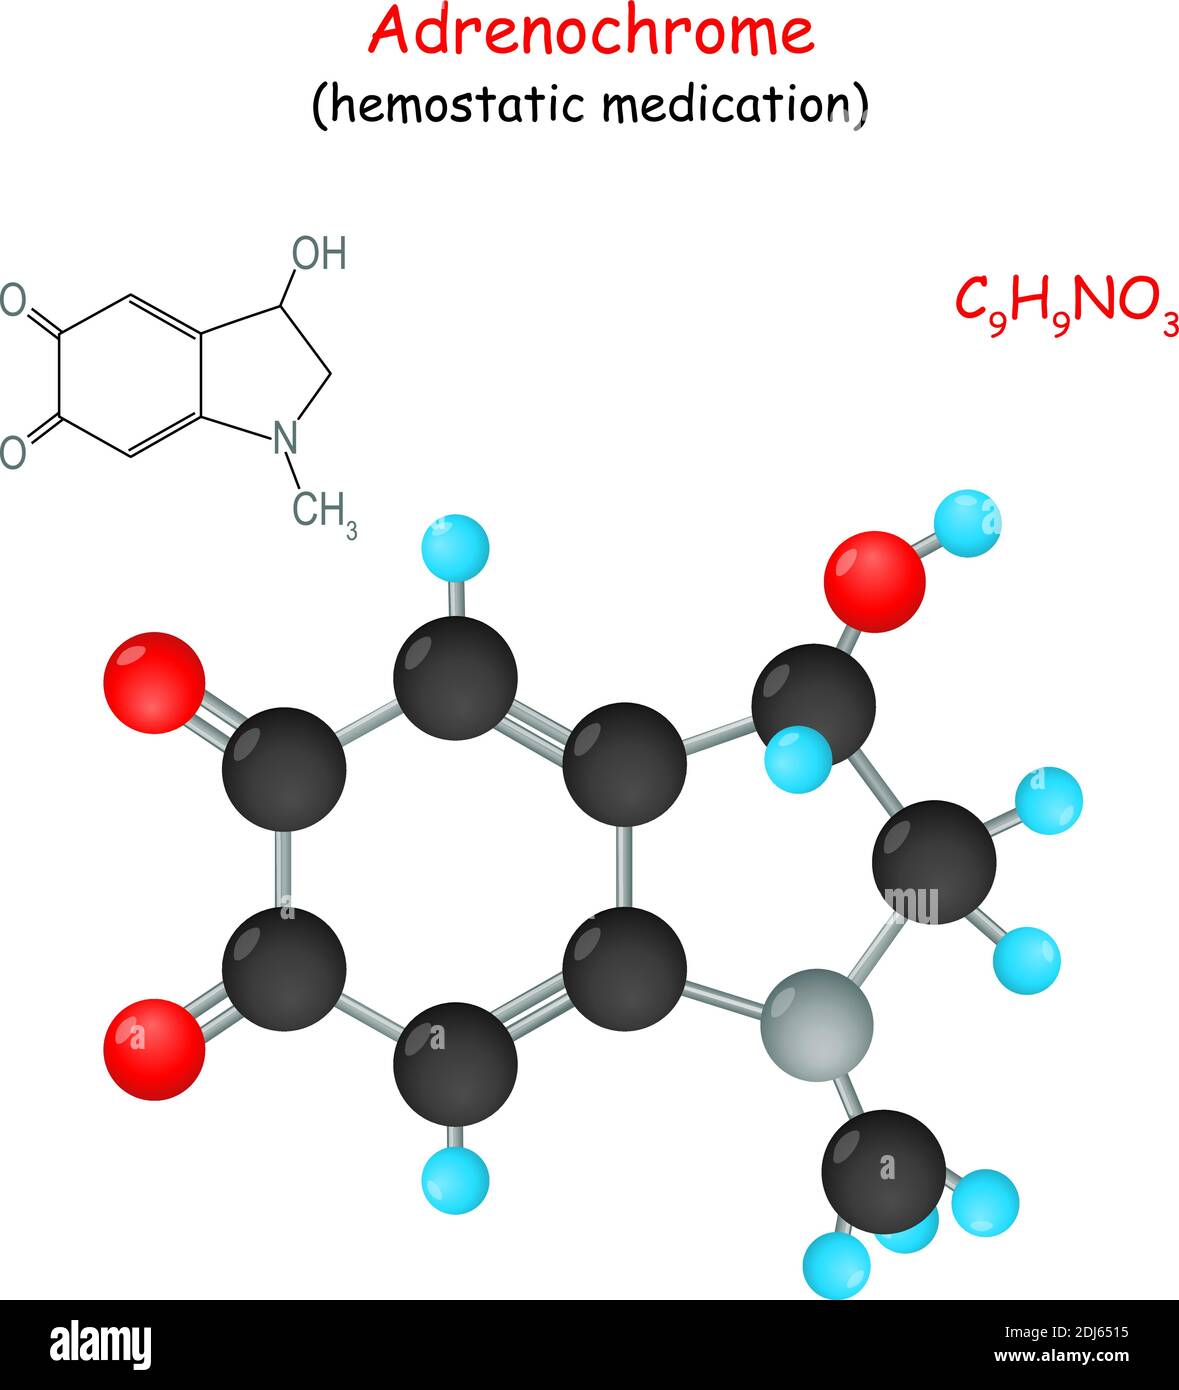 Adrenochrome. Chemische Strukturformel und Modell des Moleküls der Hämostatikmedikation. Vektorgrafik Stock Vektor